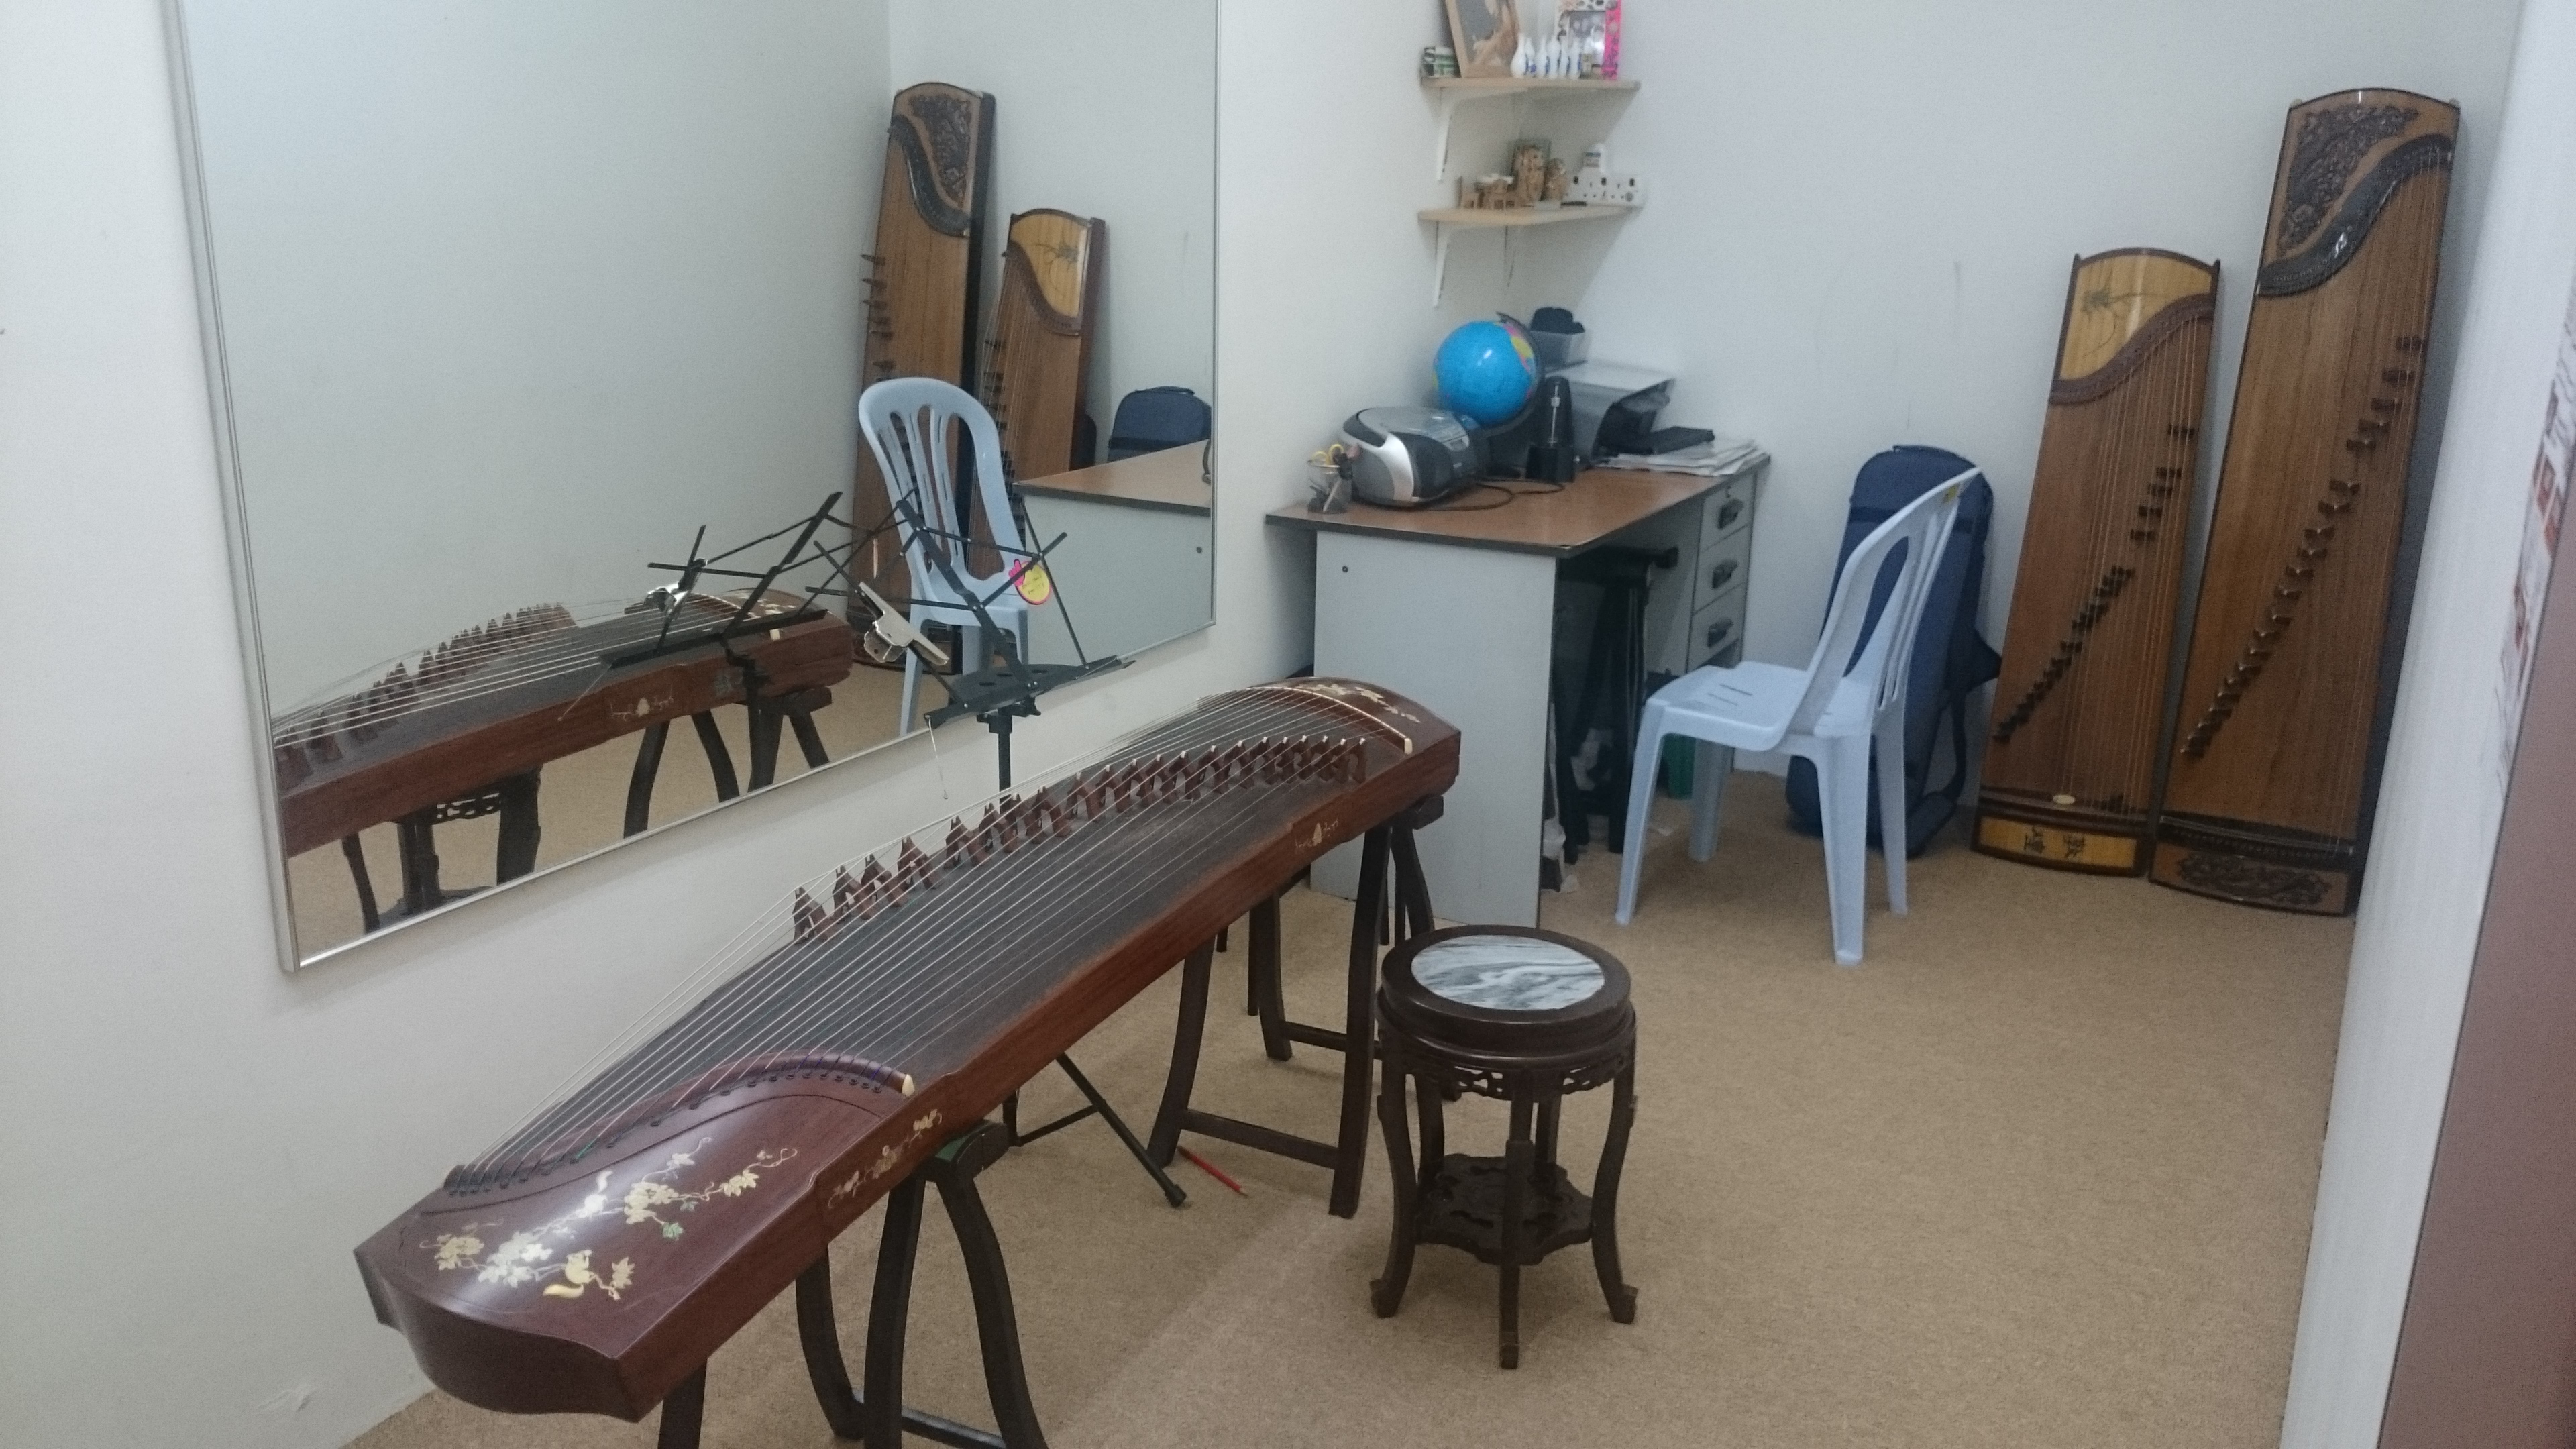  Guzheng Room